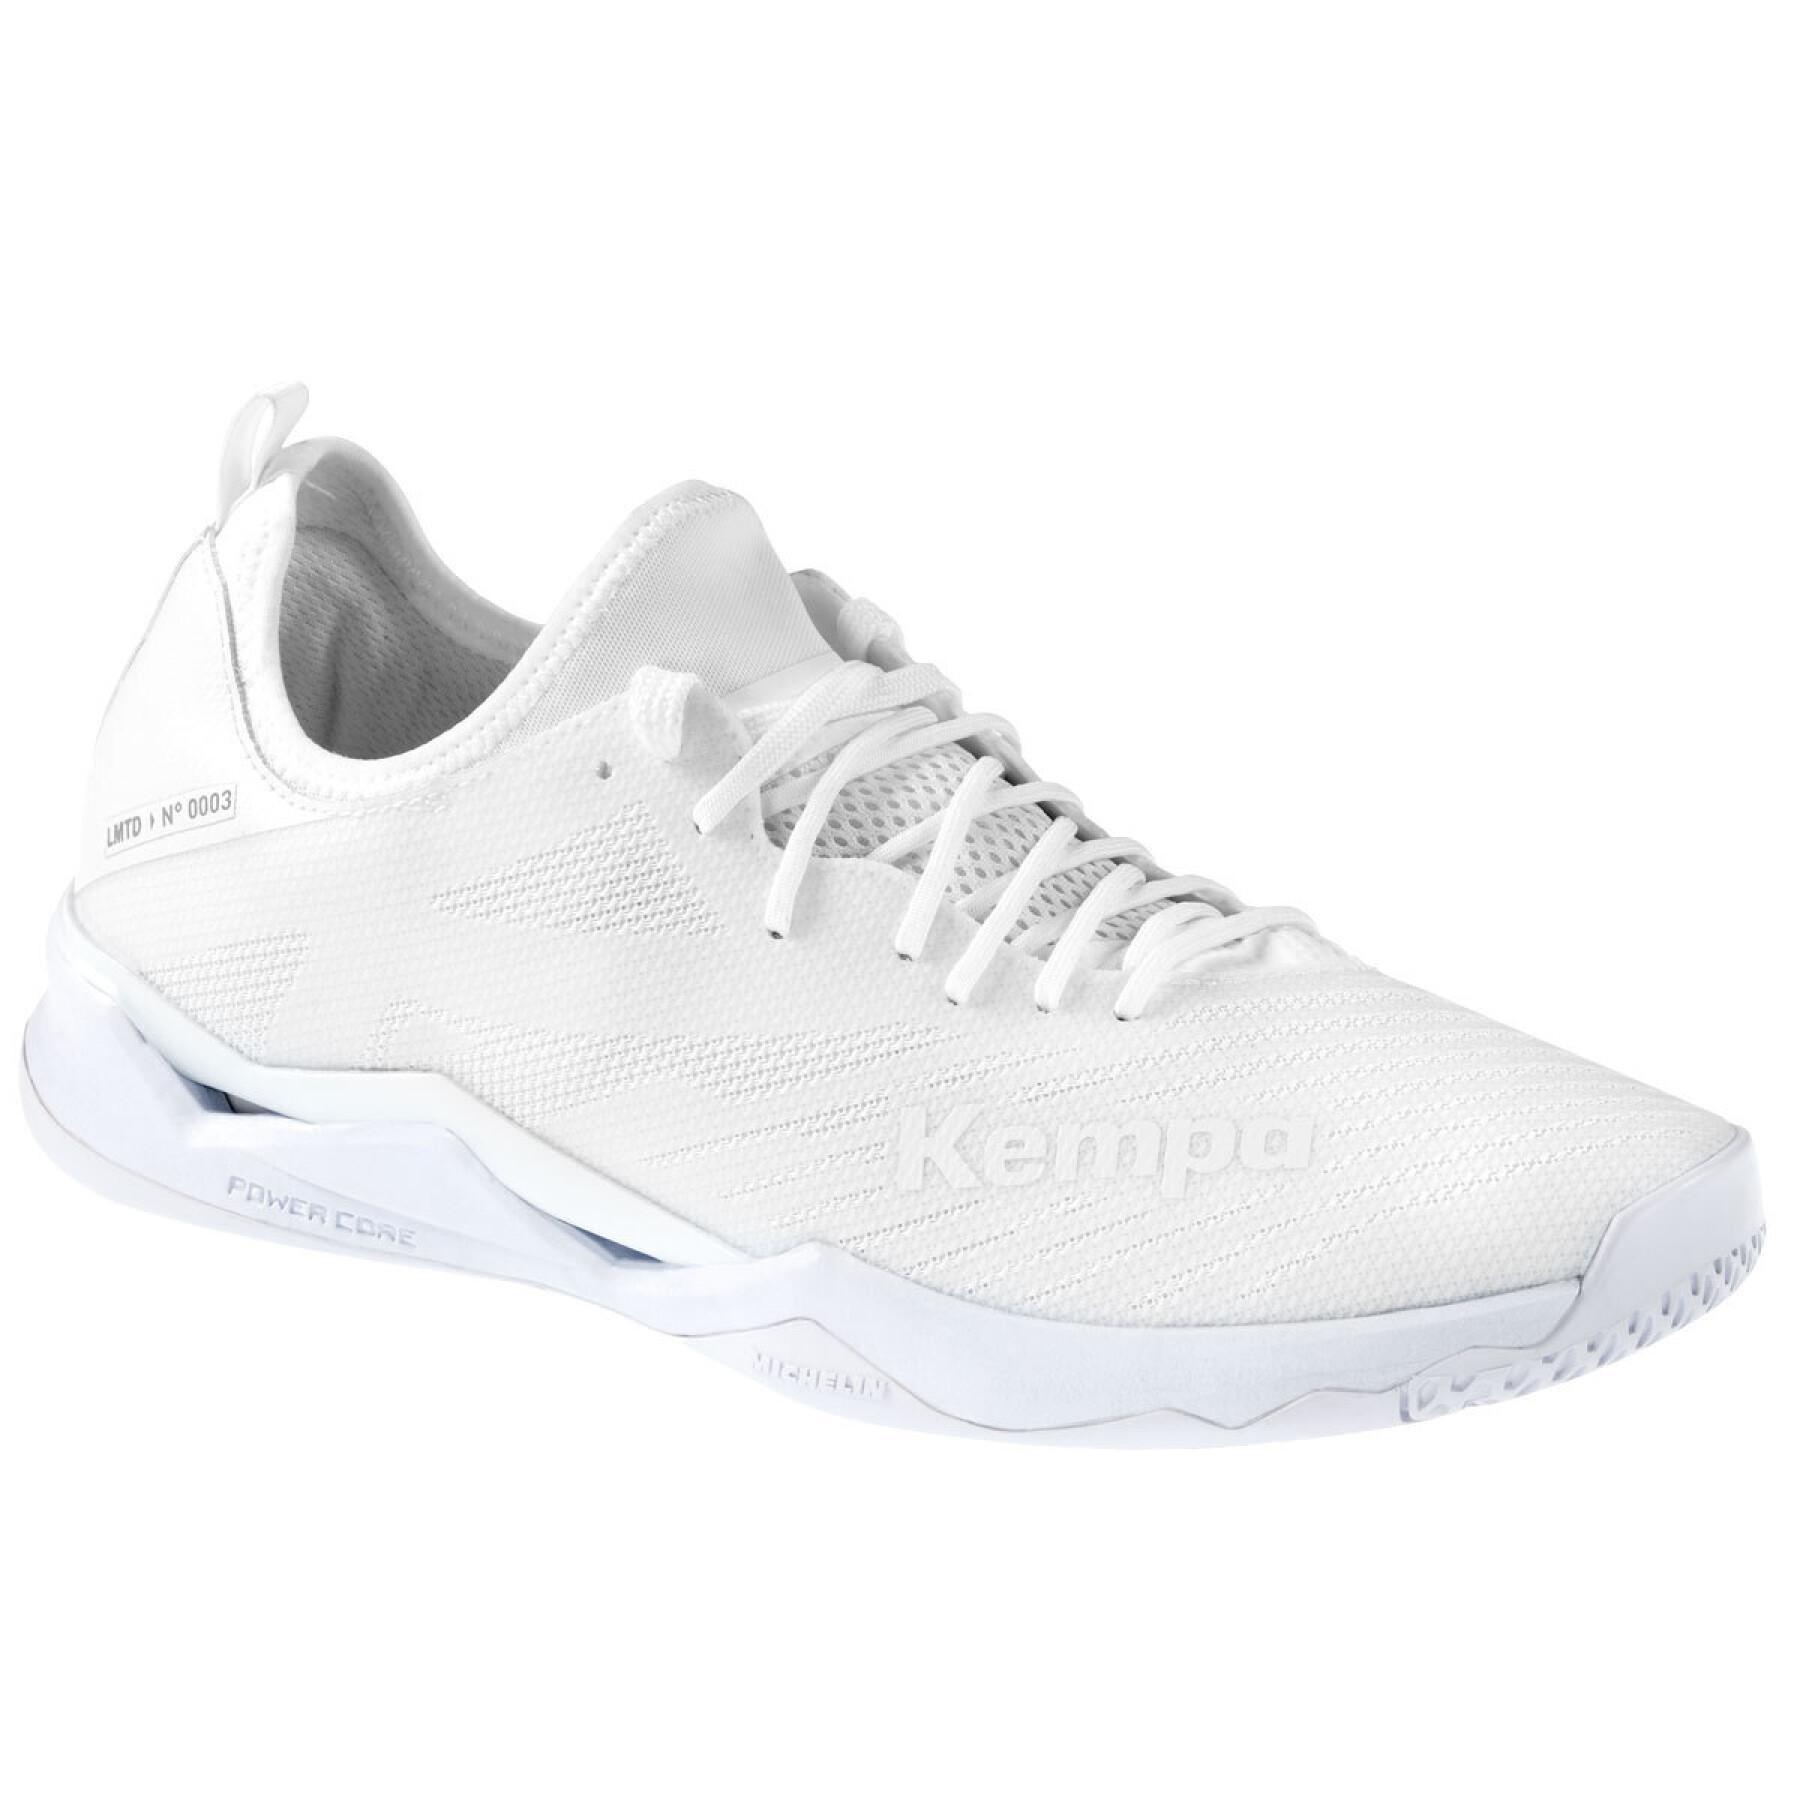 Chaussures indoor Kempa Wing Lite 2.0 Black & White